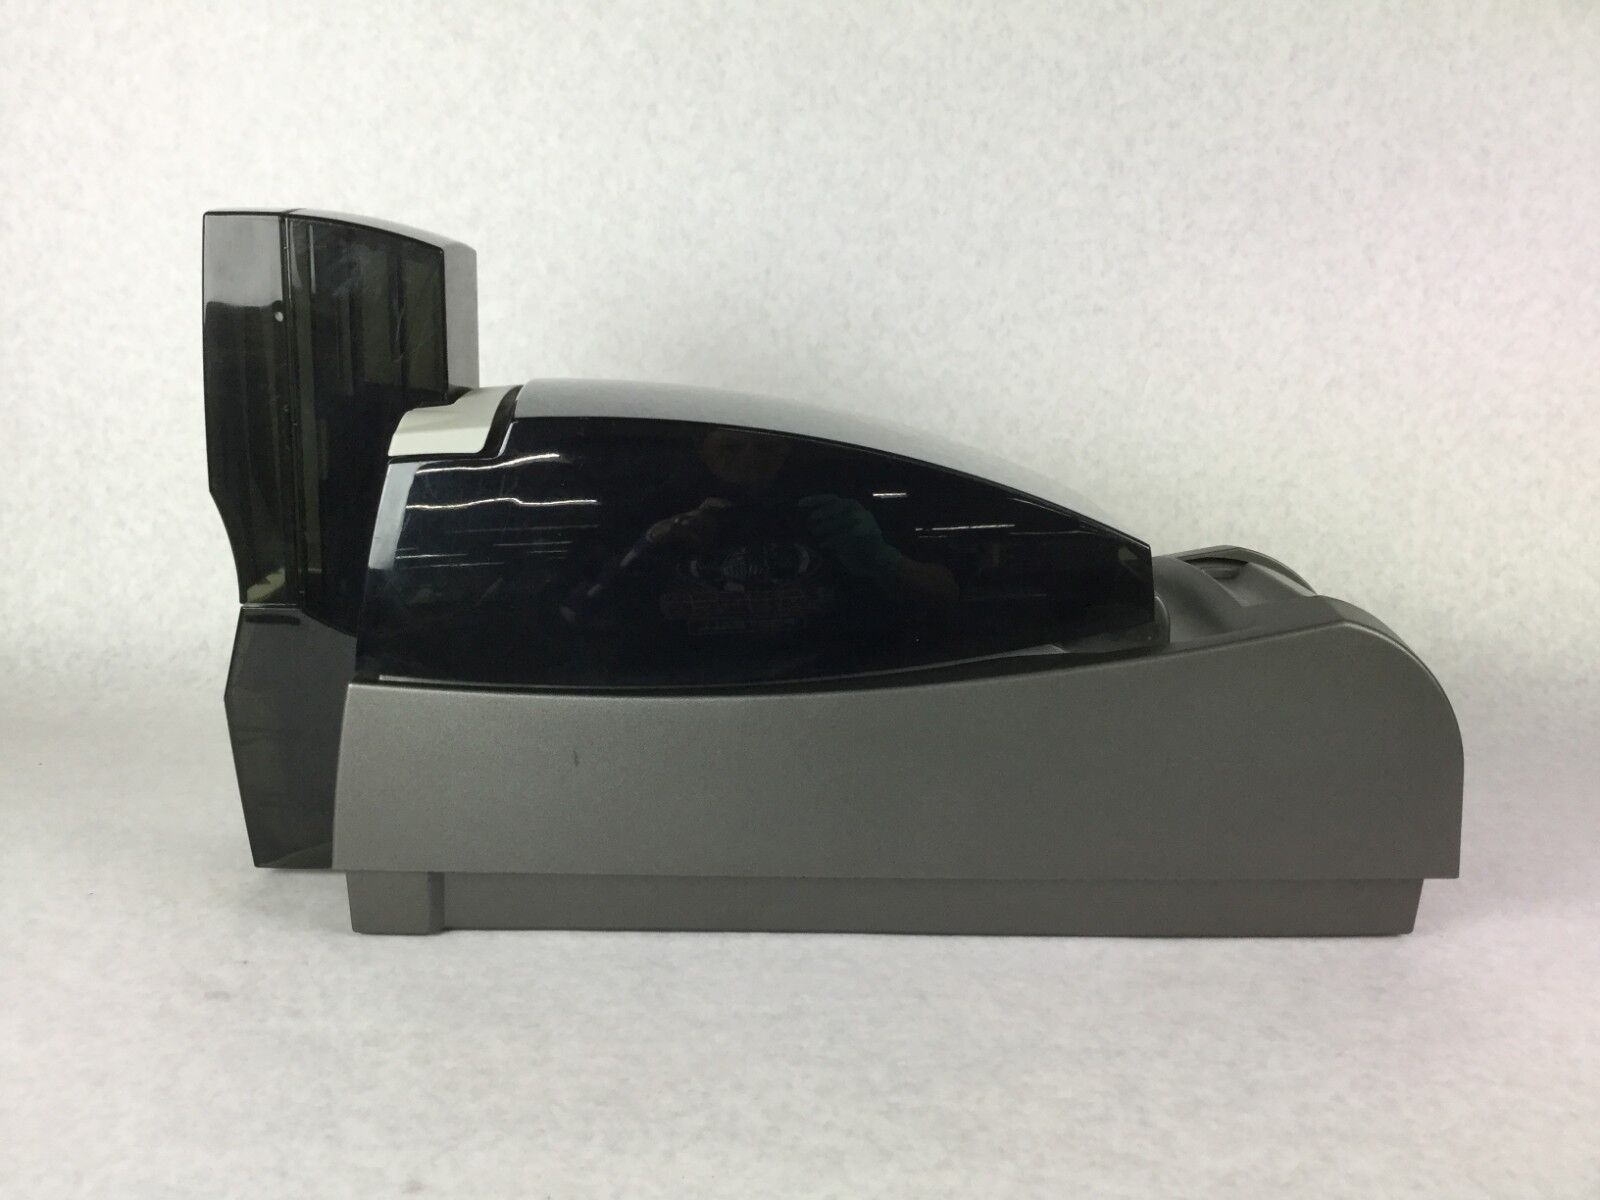 DataCard CP60 Plus ID Card Thermal Printer For Parts or Repair No AC Adapter.